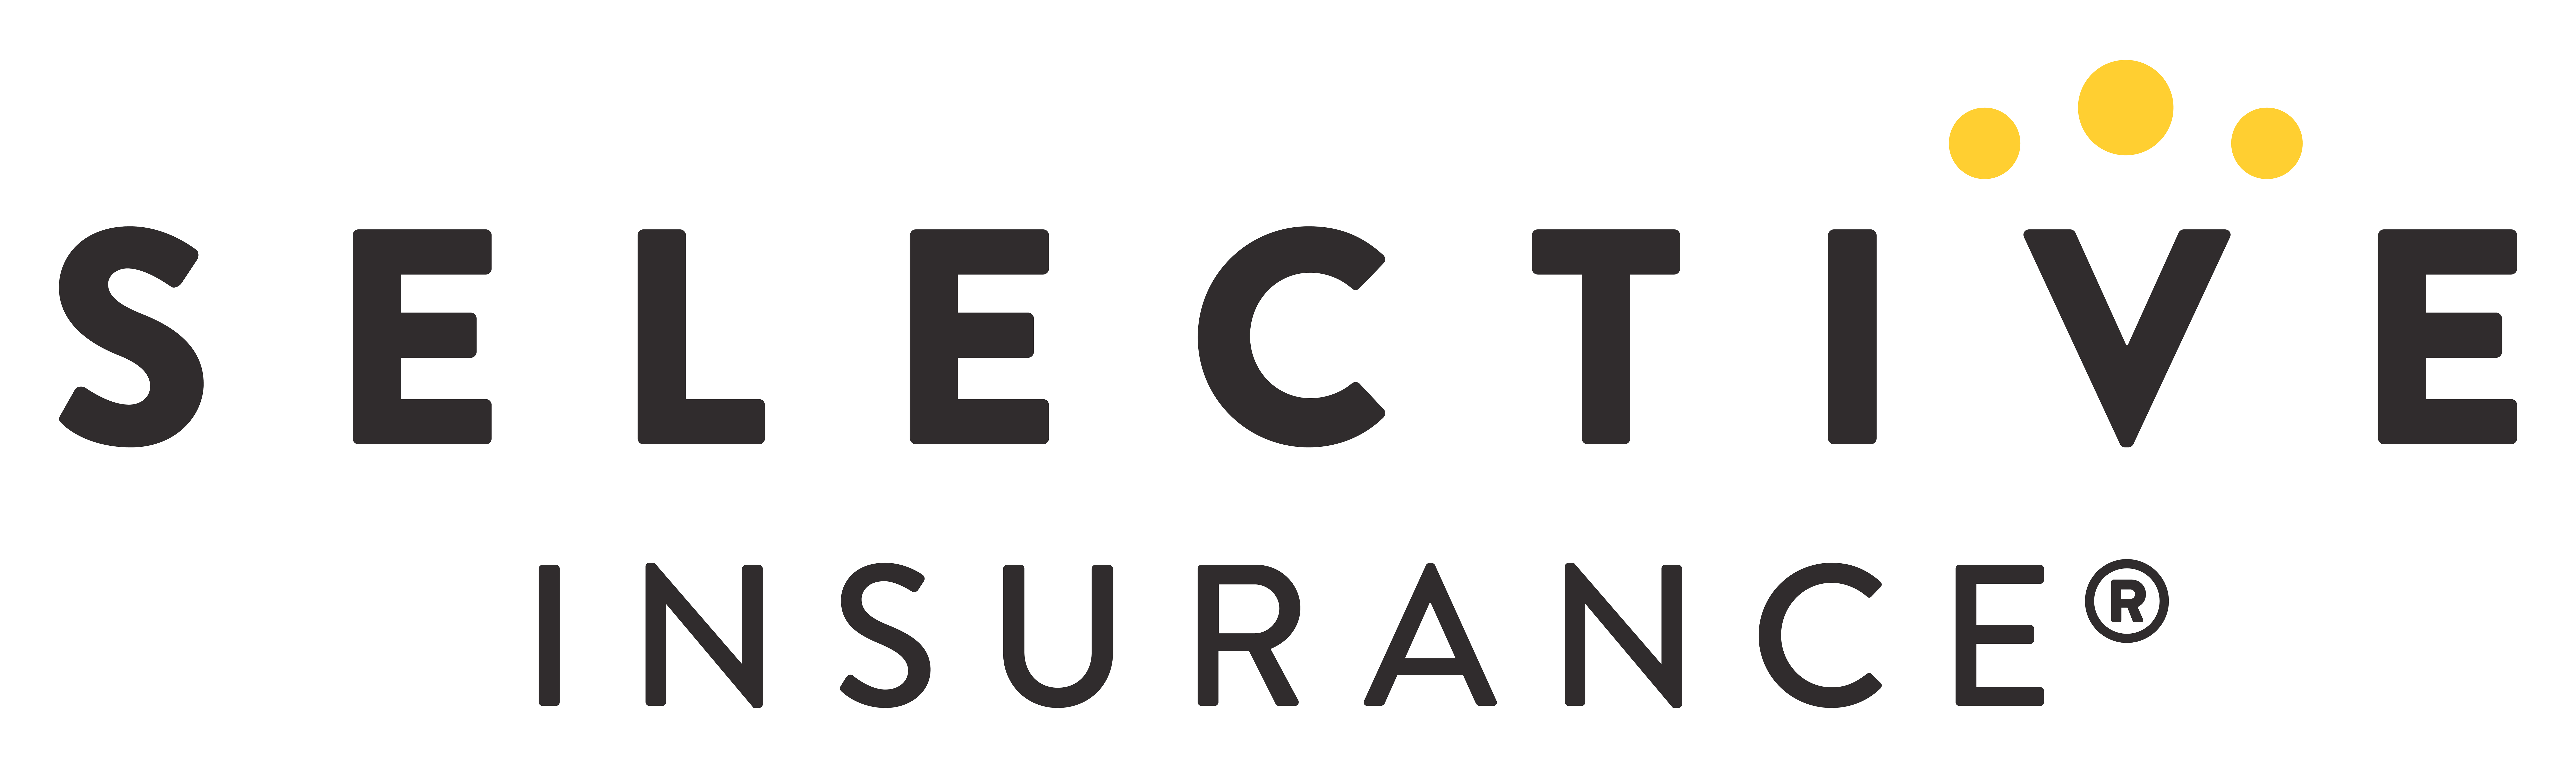 Selective Insurance Logo.jpg